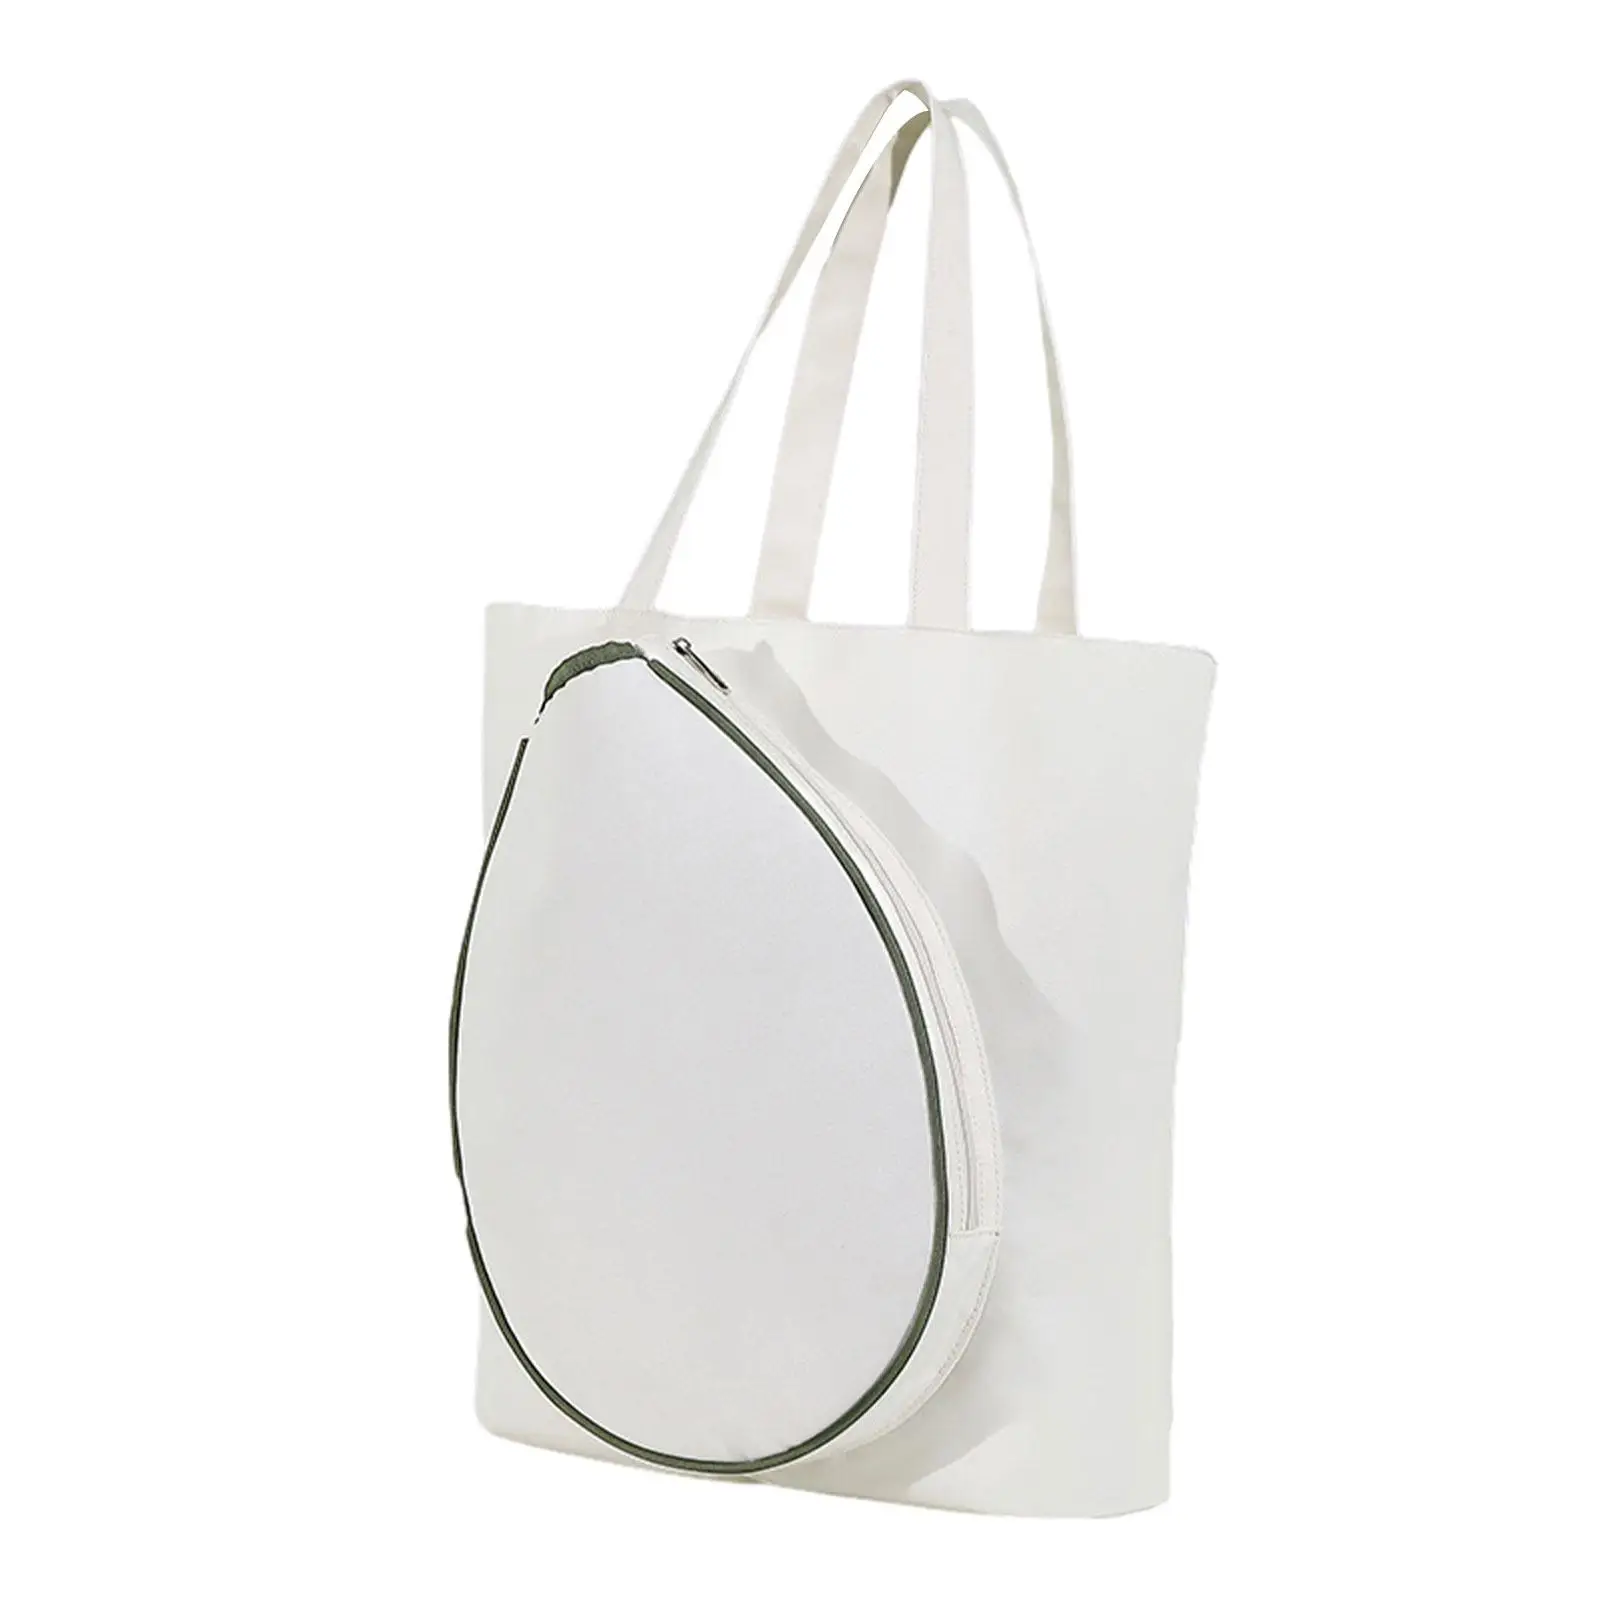 Tennis Handbag Balls and Other Accessories Fitness Sport Carrying Tennis Bag